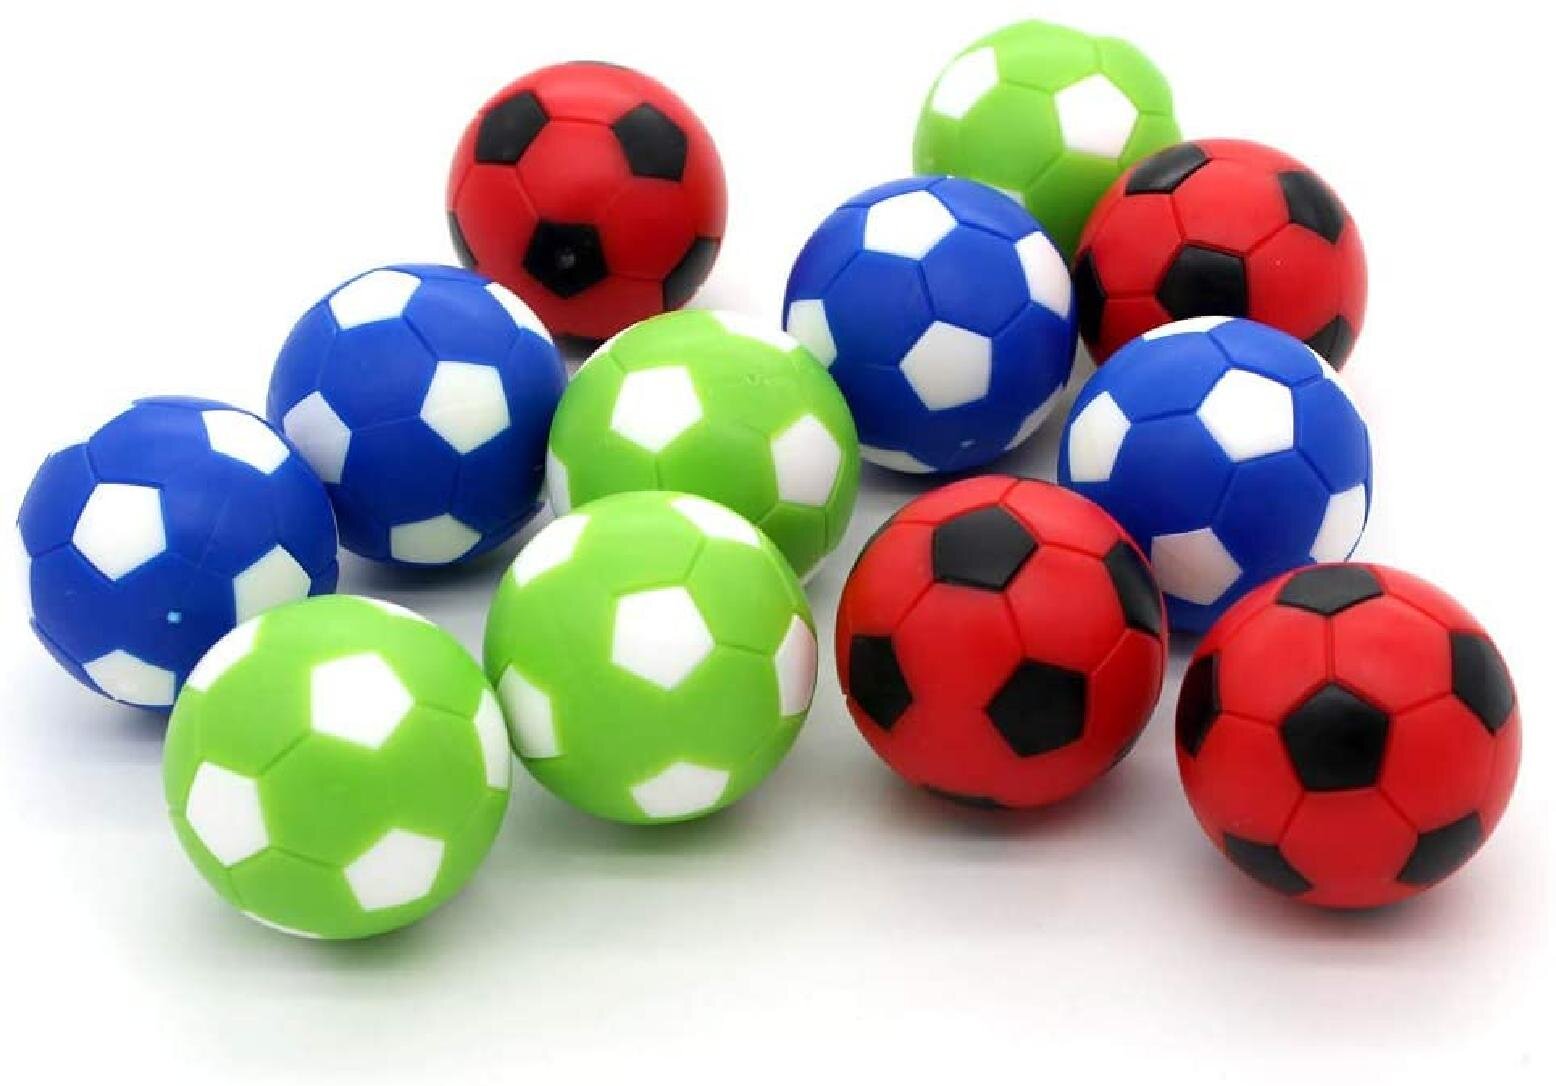 36MM Wooden Desktop Soccer Sports Foosball Table Soccer Replacement Balls Cork Tabletop Games Balls